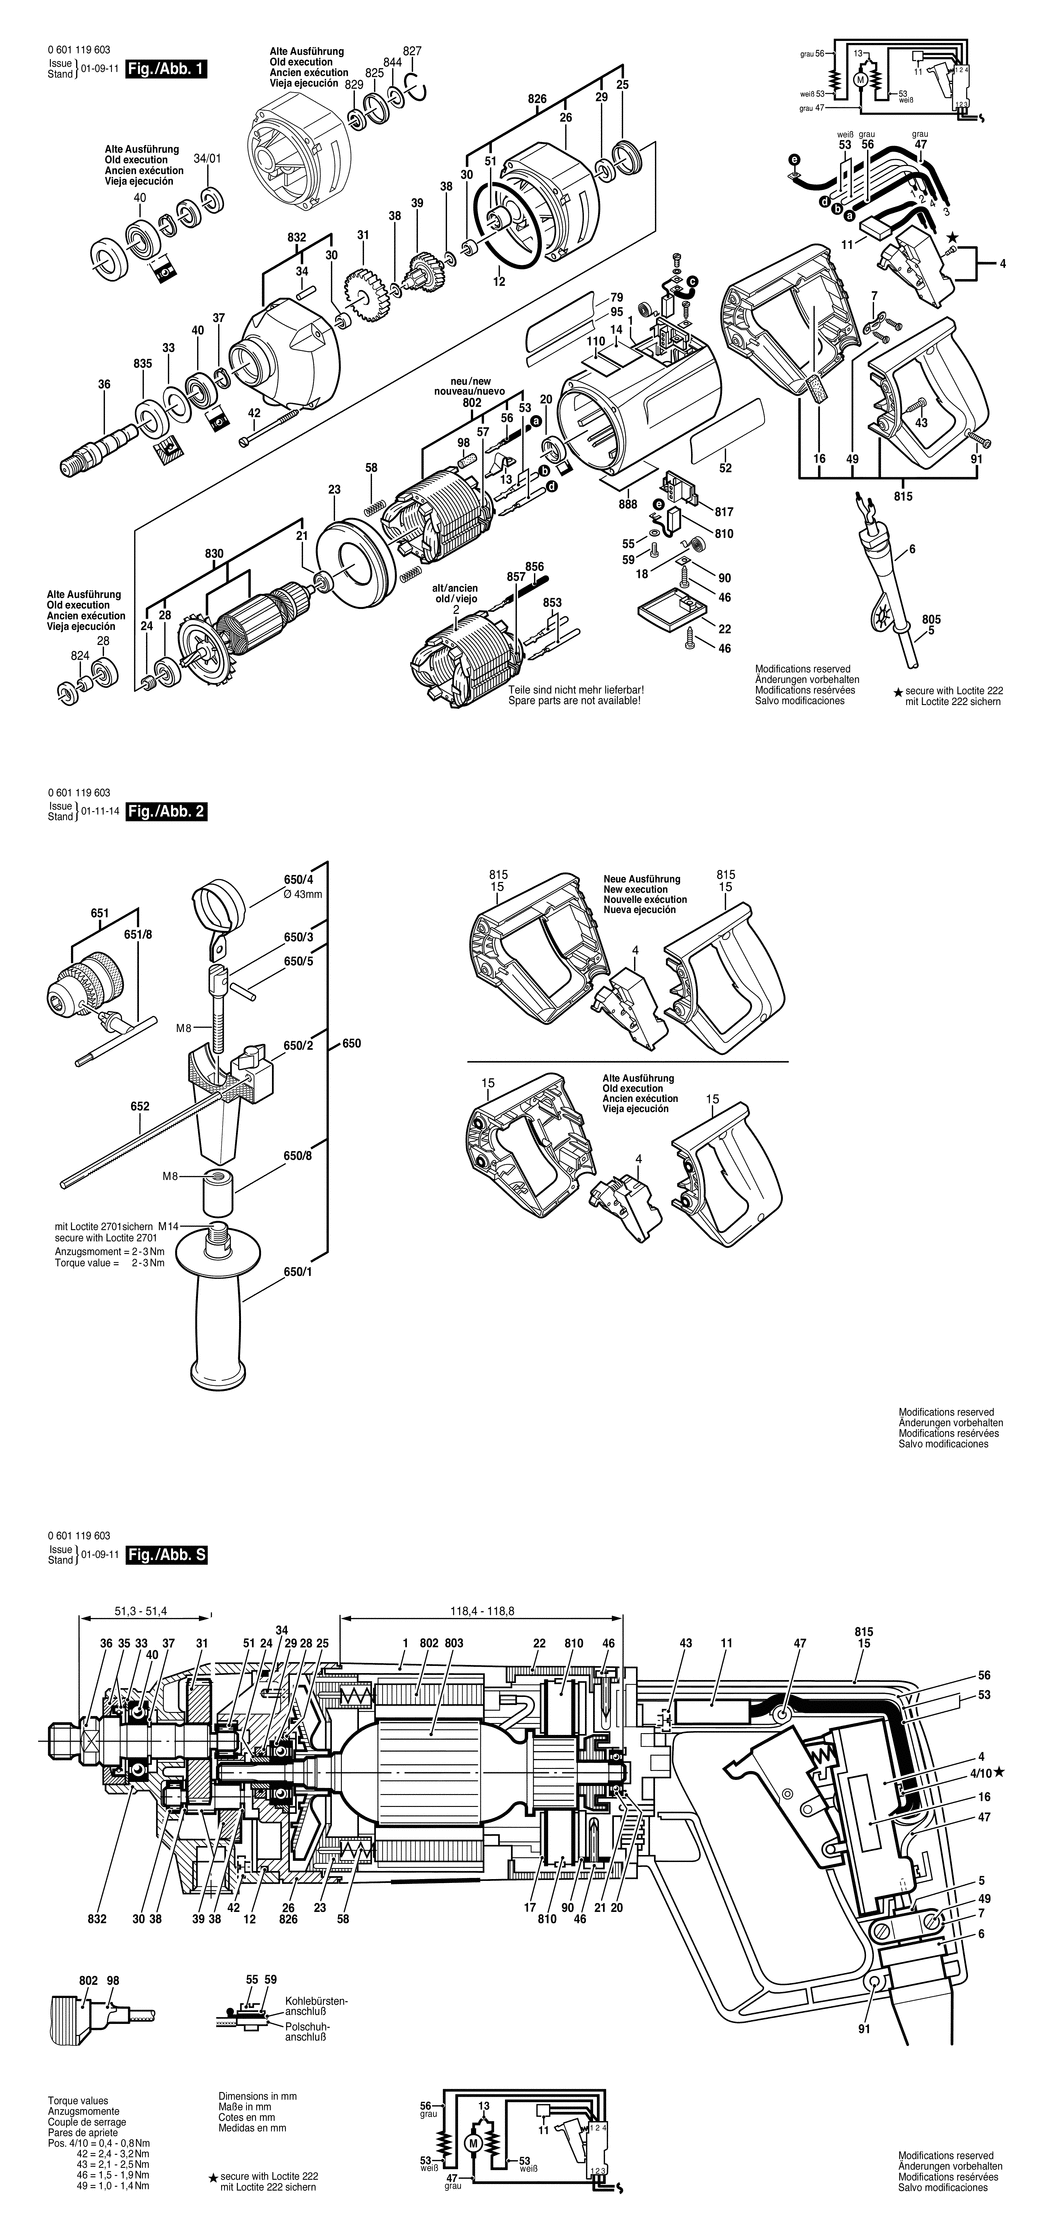 Bosch ---- / 0601119641 / GB 110 Volt Spare Parts